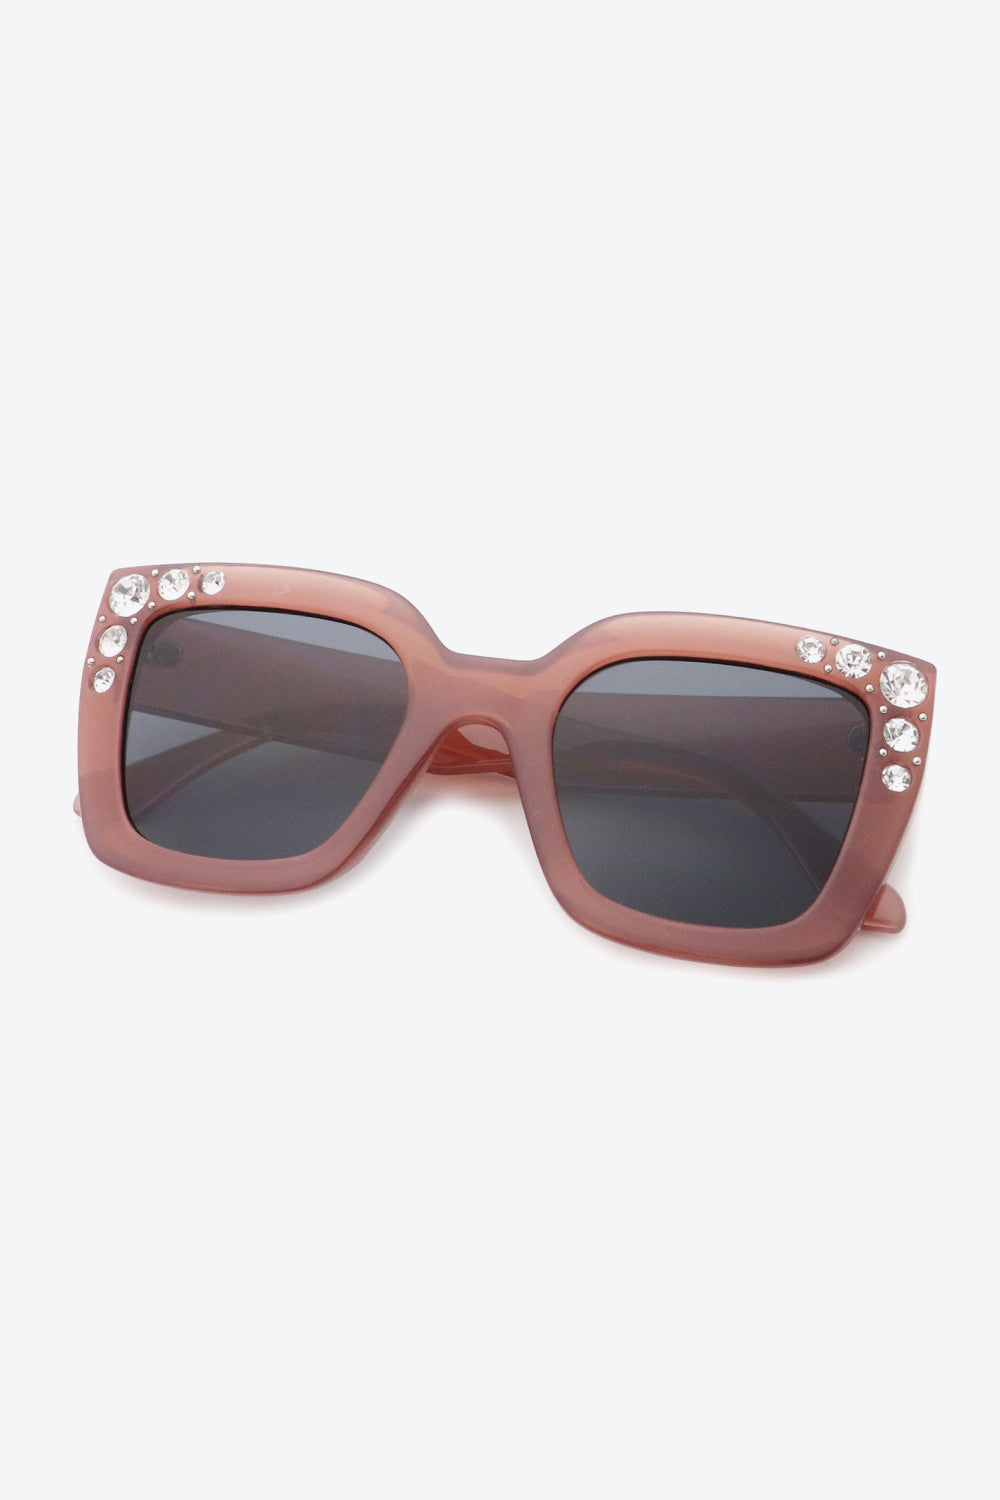 Accessories | Pink Women Square Eyewear Rhinestone Luxury Diamond Sunglasses  | Poshmark